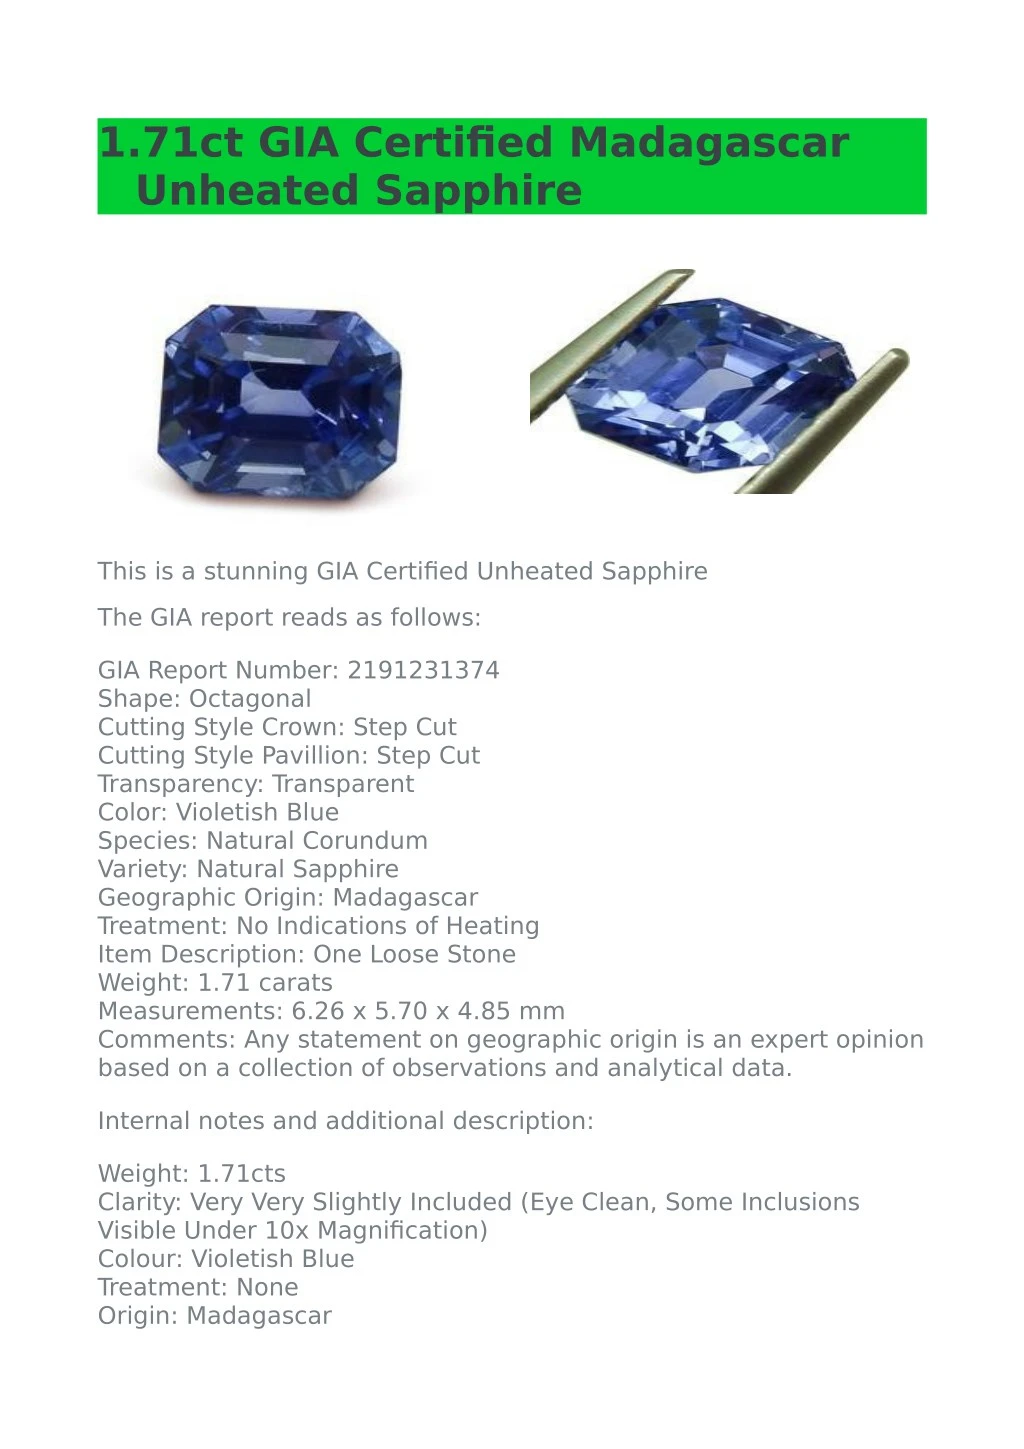 1 71ct gia certified madagascar unheated sapphire